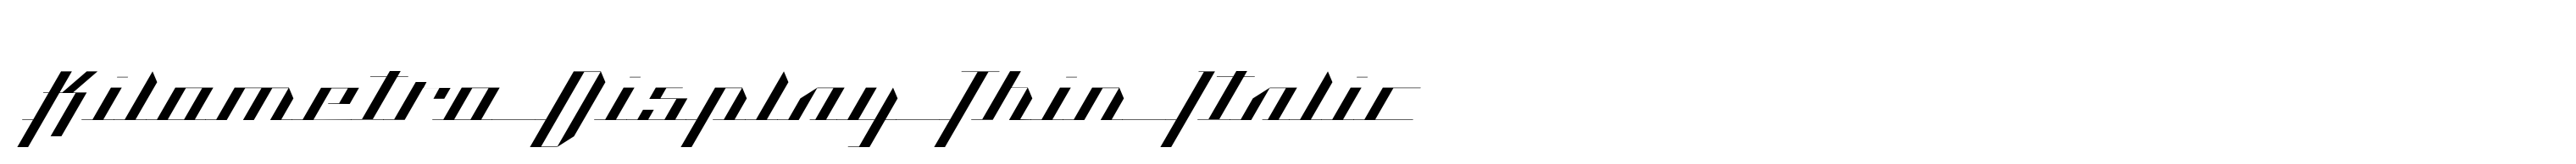 Kilometro Display Thin Italic